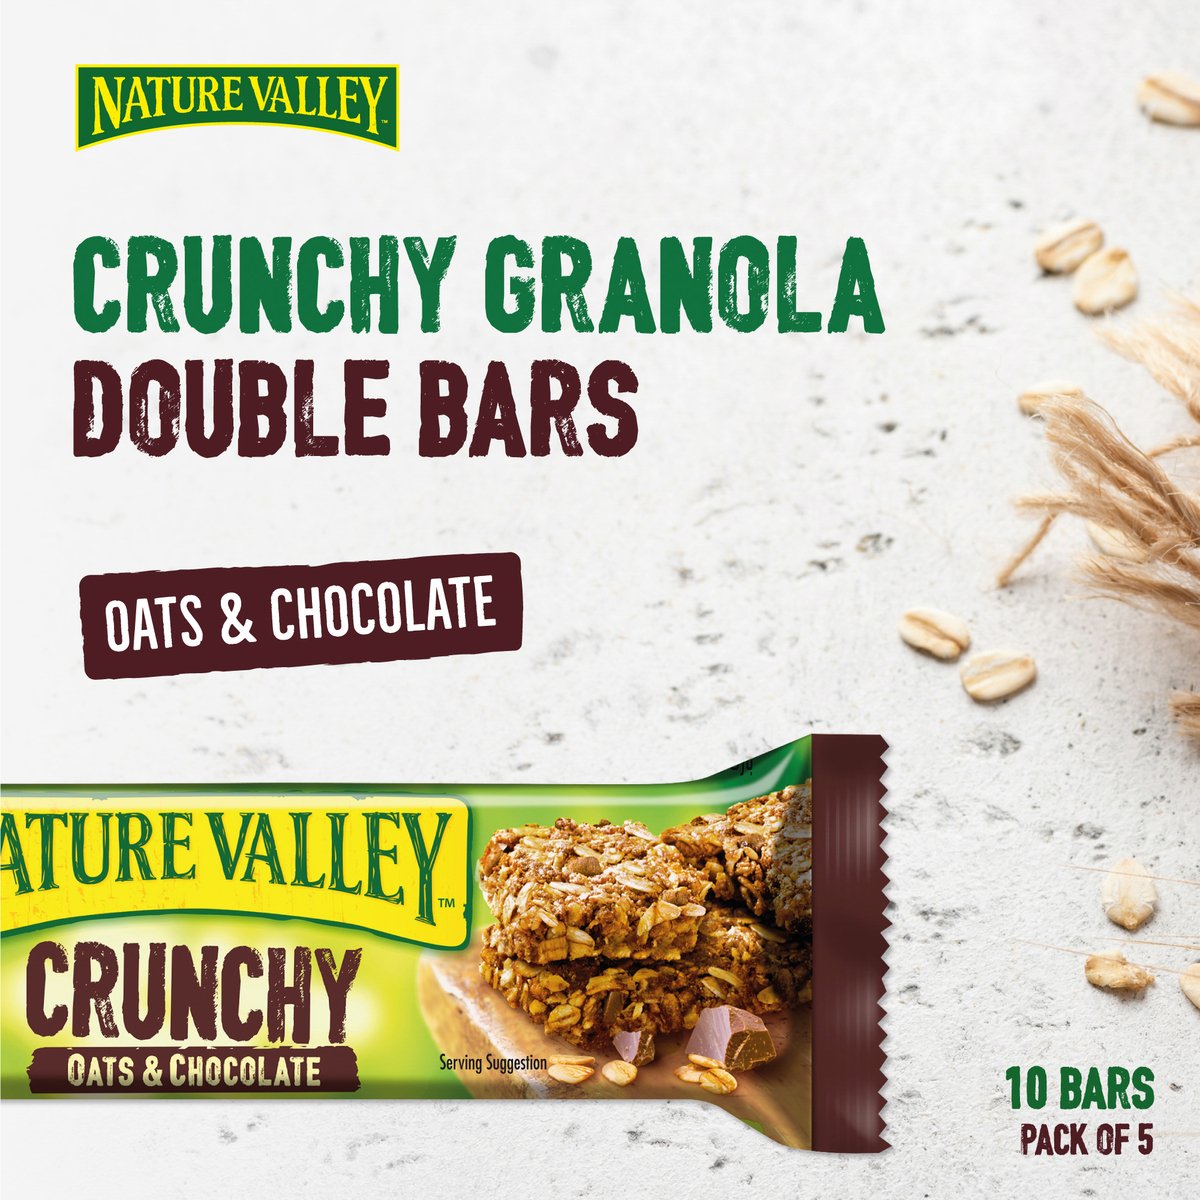 Nature Valley Crunchy Oats & Chocolate Granola Bar 42 g